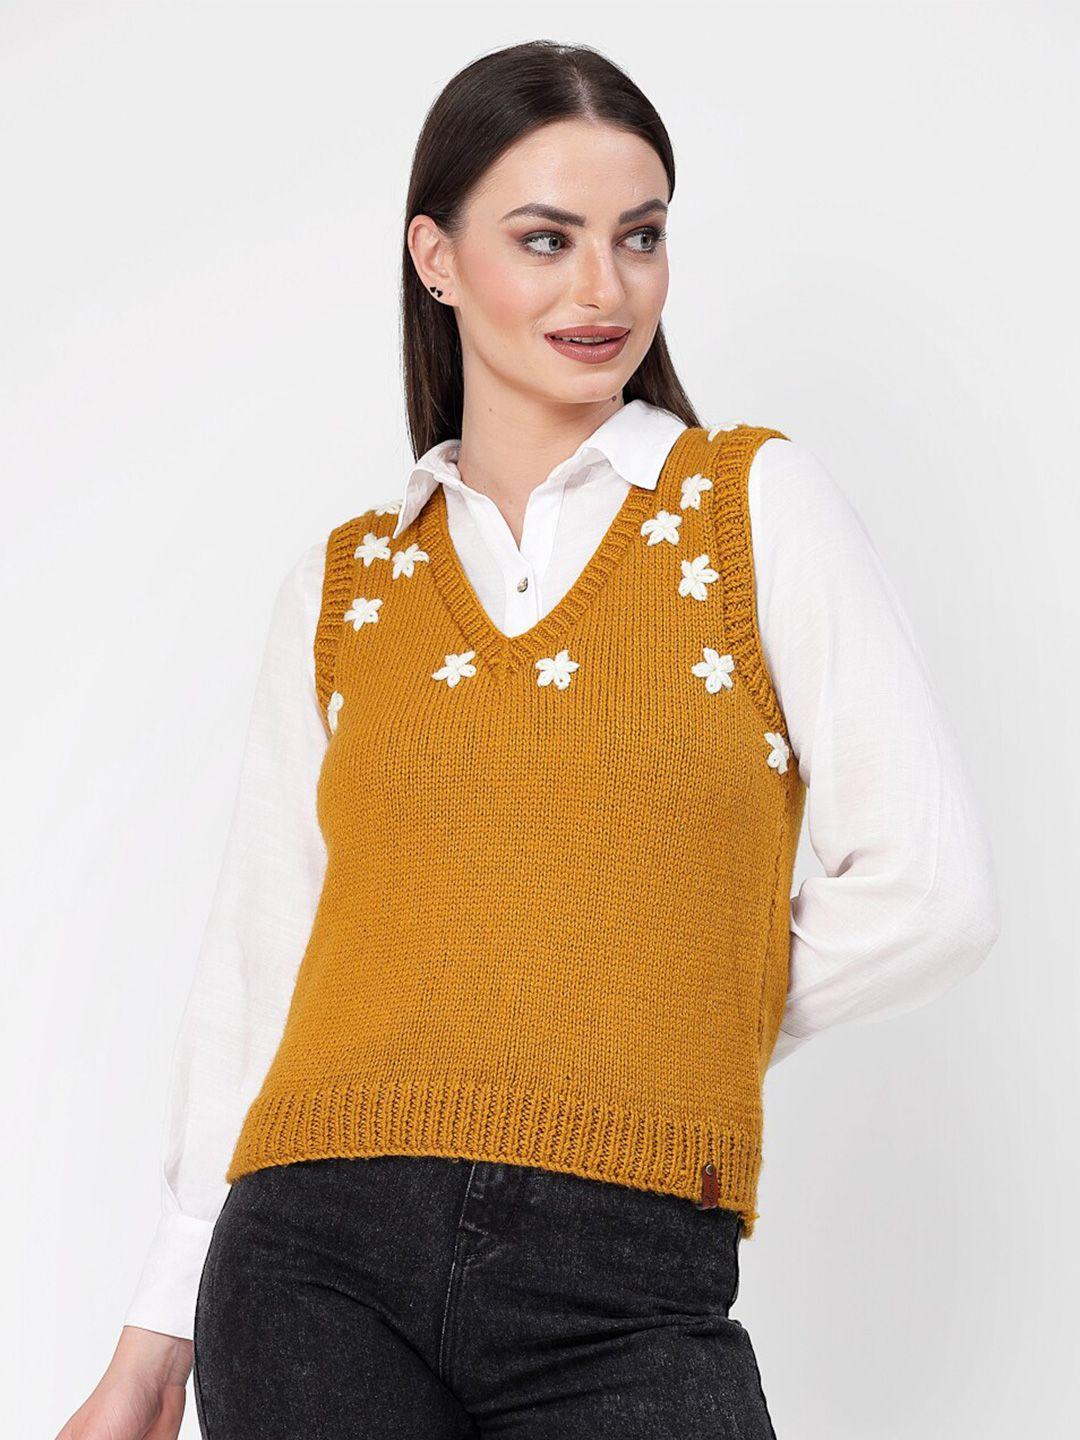 velvery floral embroidered v-neck sweater vest